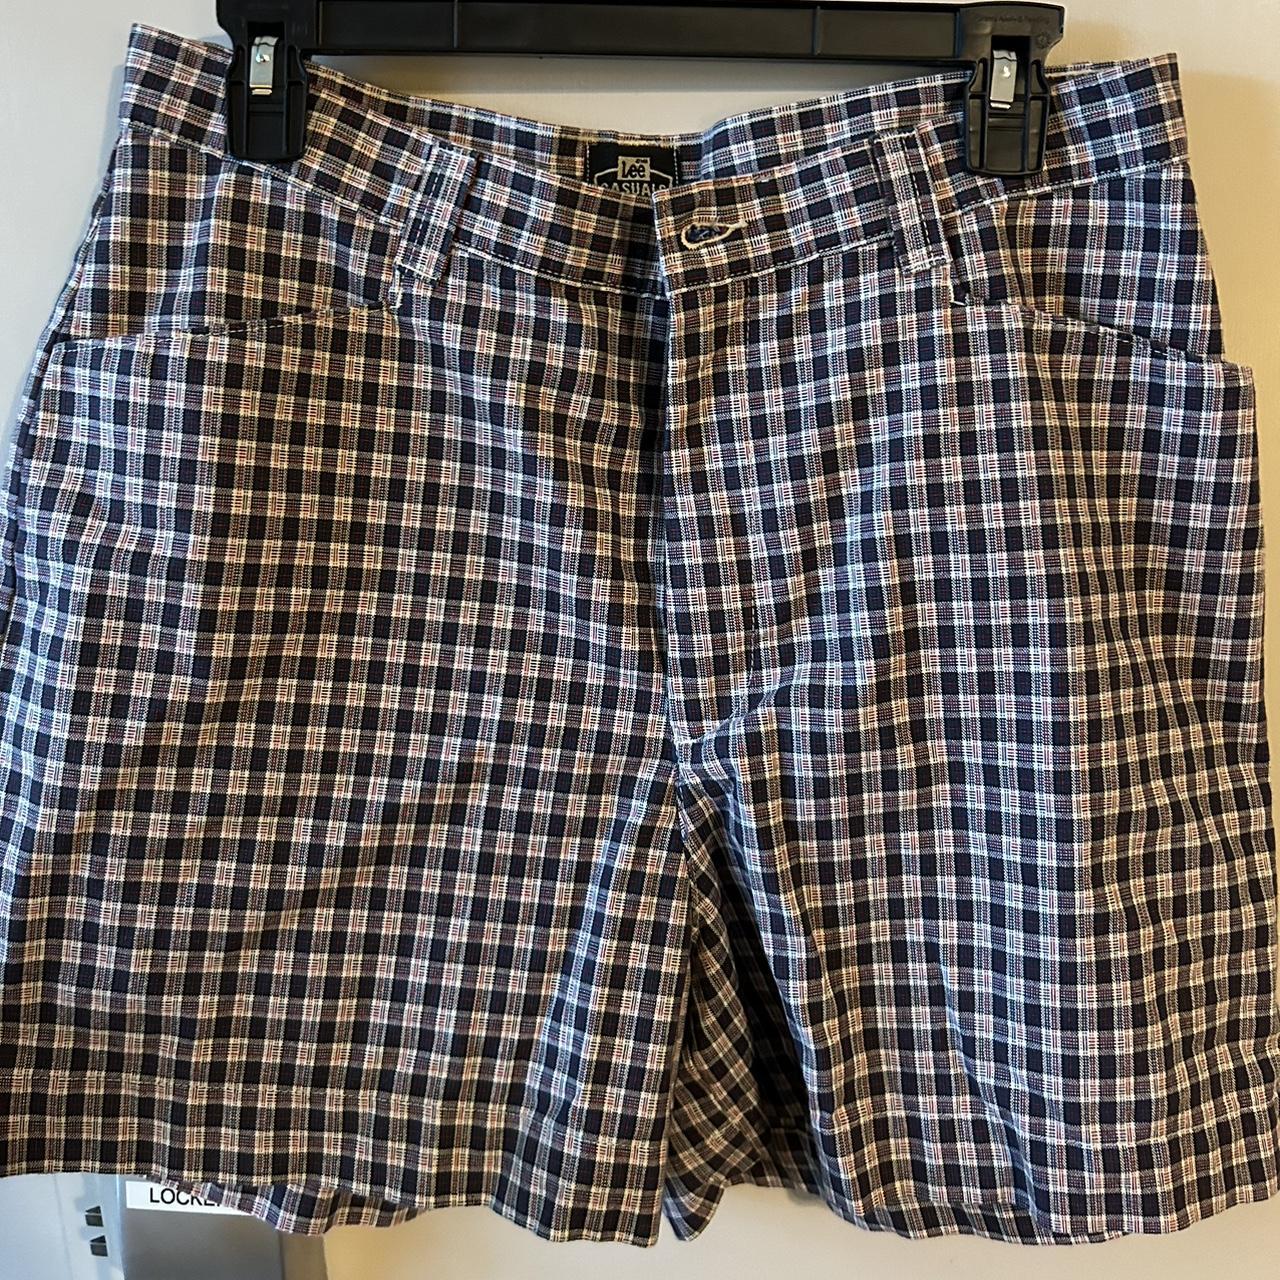 lee casual plaid shorts/jorts - Depop